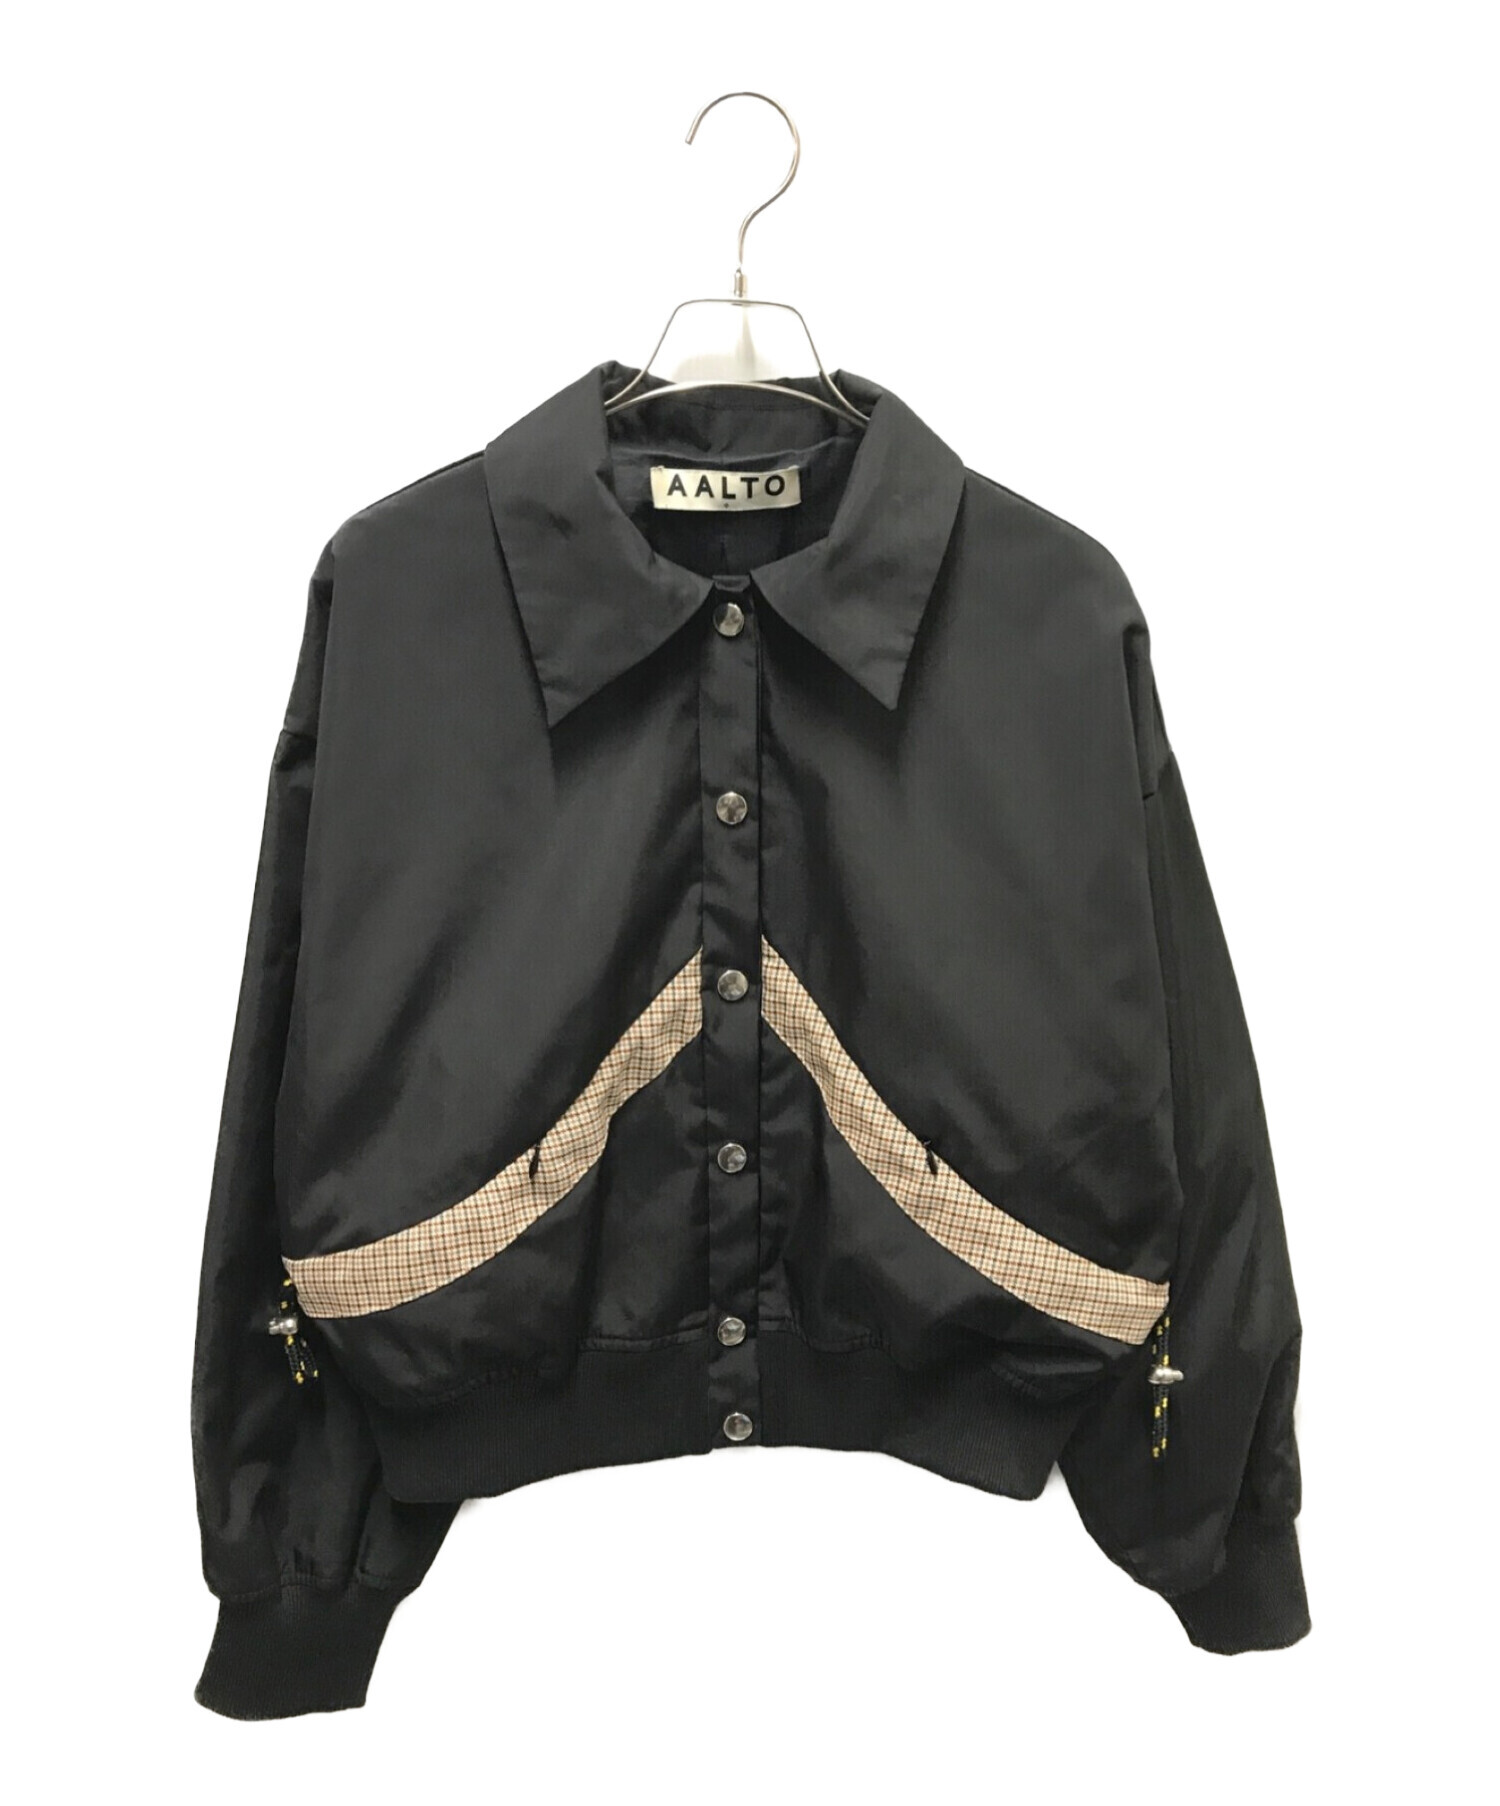 AALTO (アールト) Nylon Jacket In Black ブラック サイズ:36